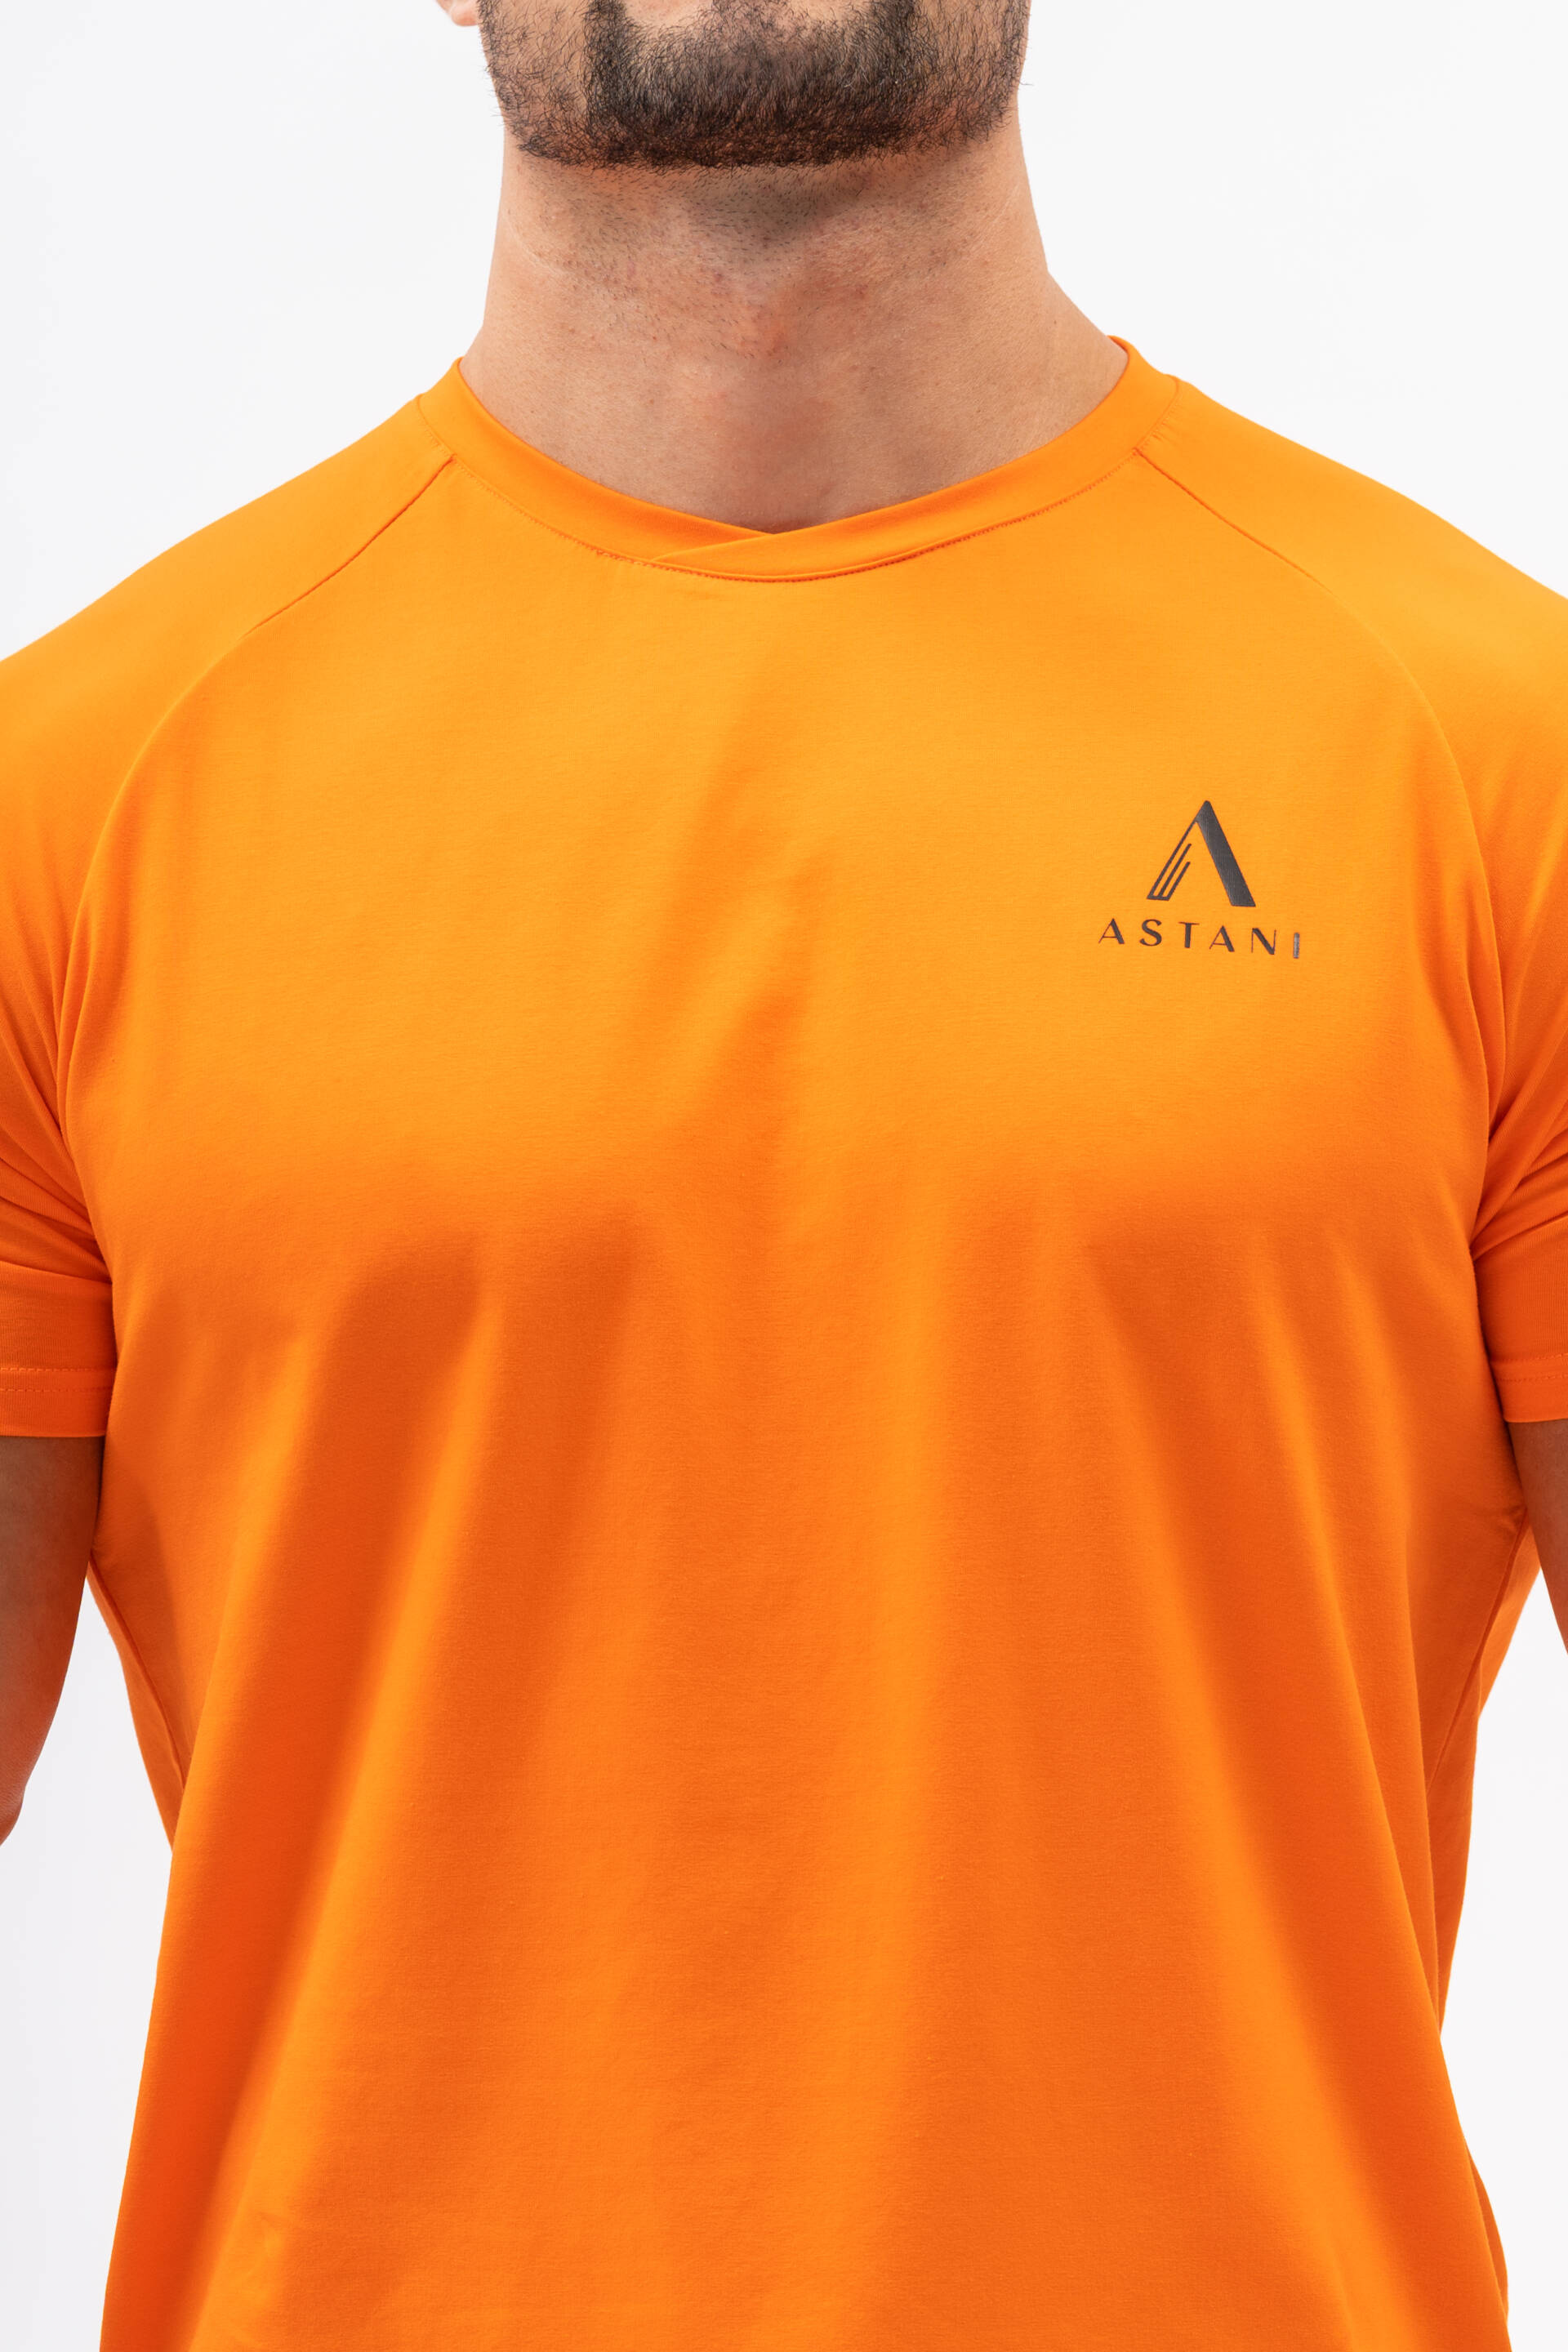 Code Orange Cotton Stretch Workout Gym Lifestyle T-Shirt